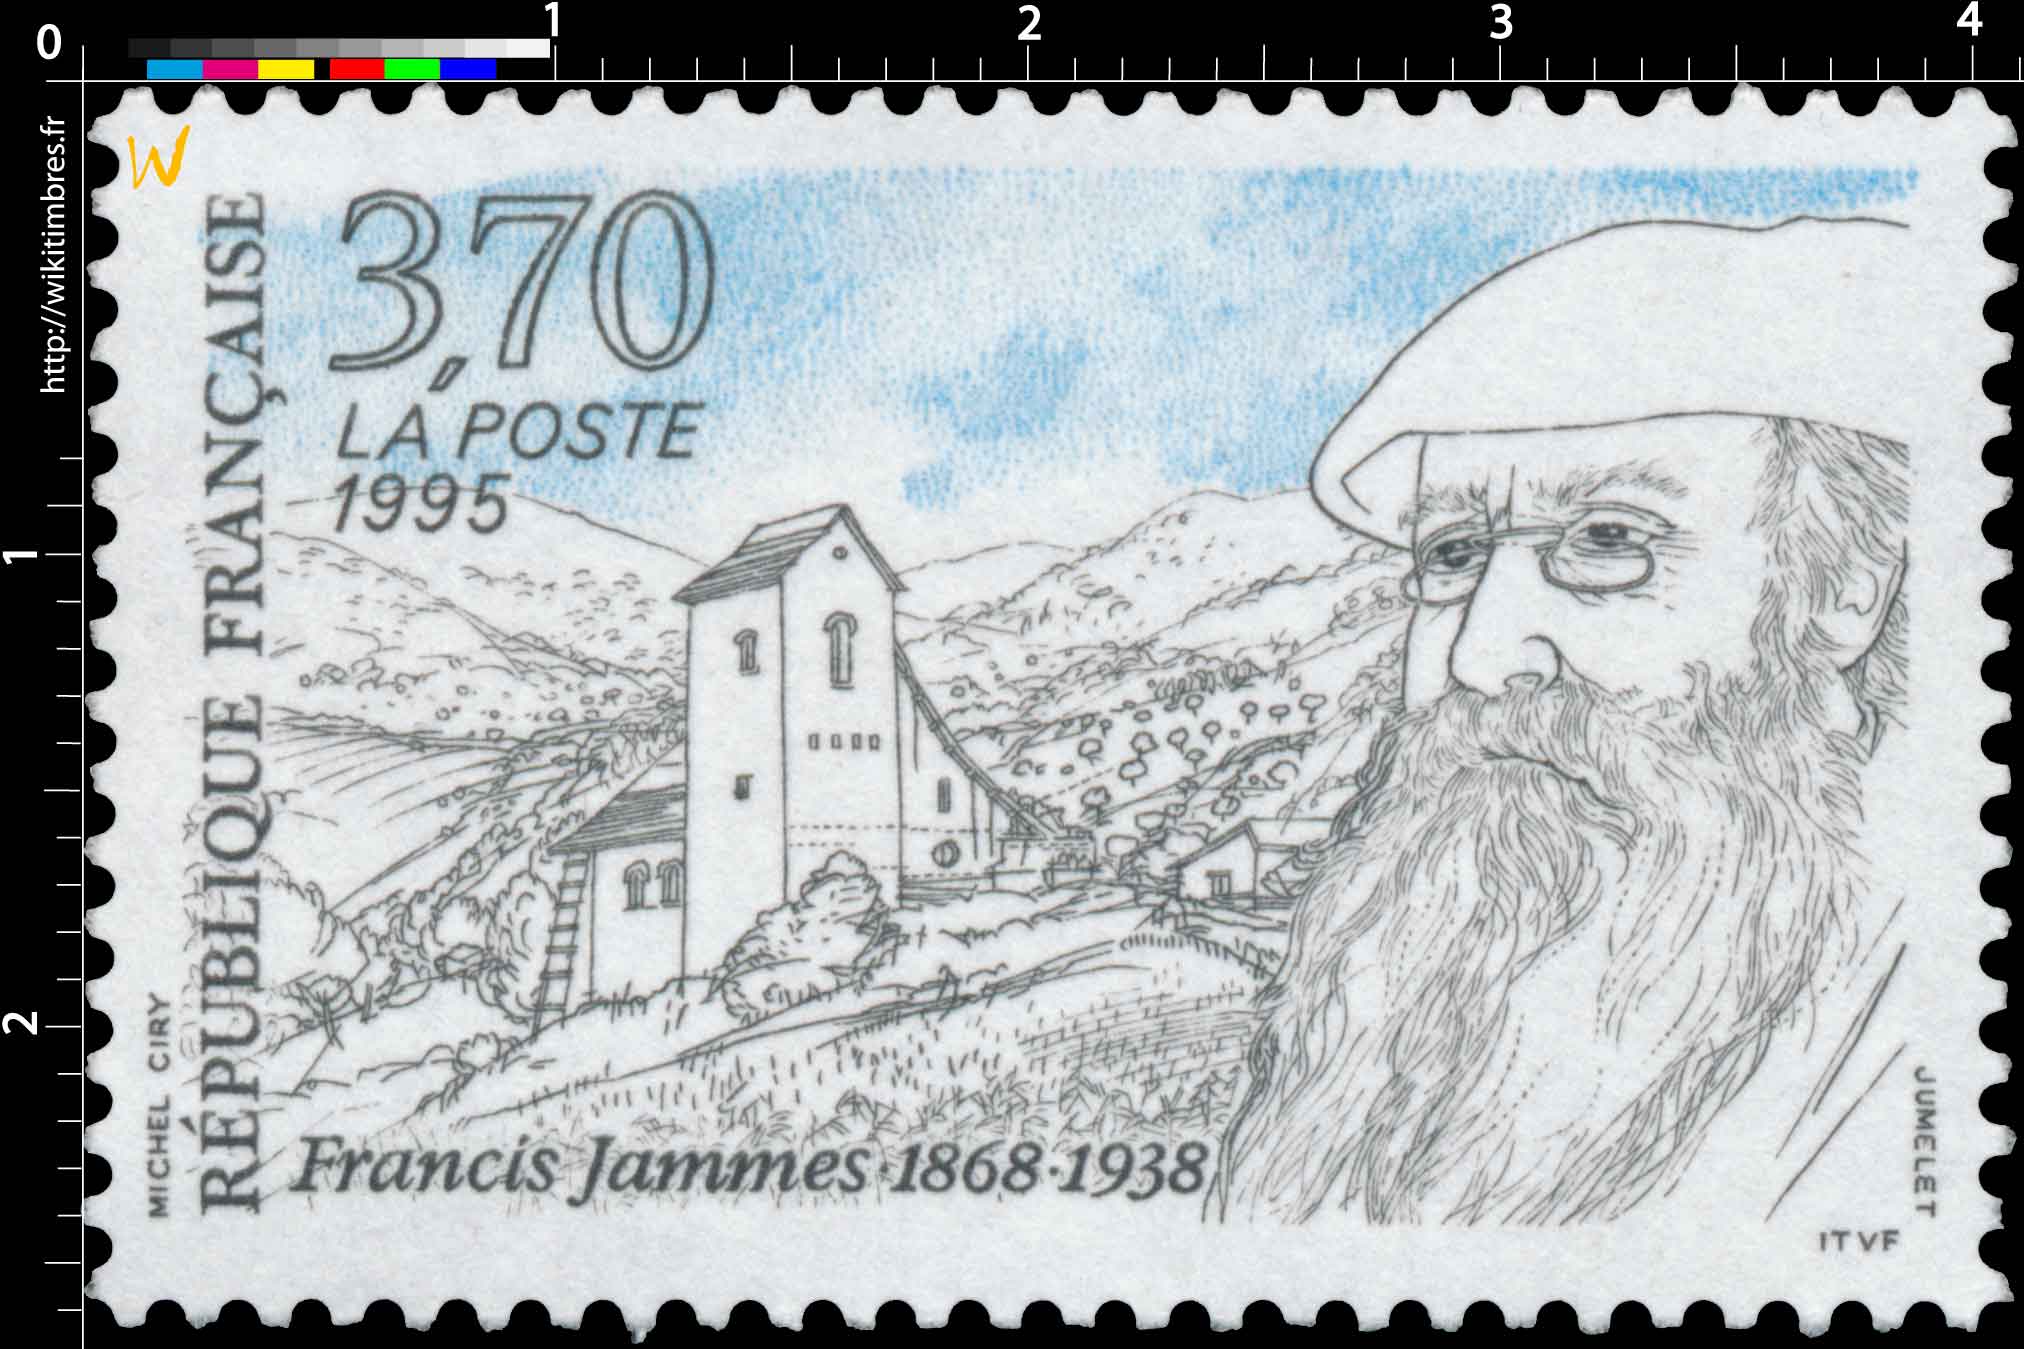 1995 Francis Jammes 1868-1938